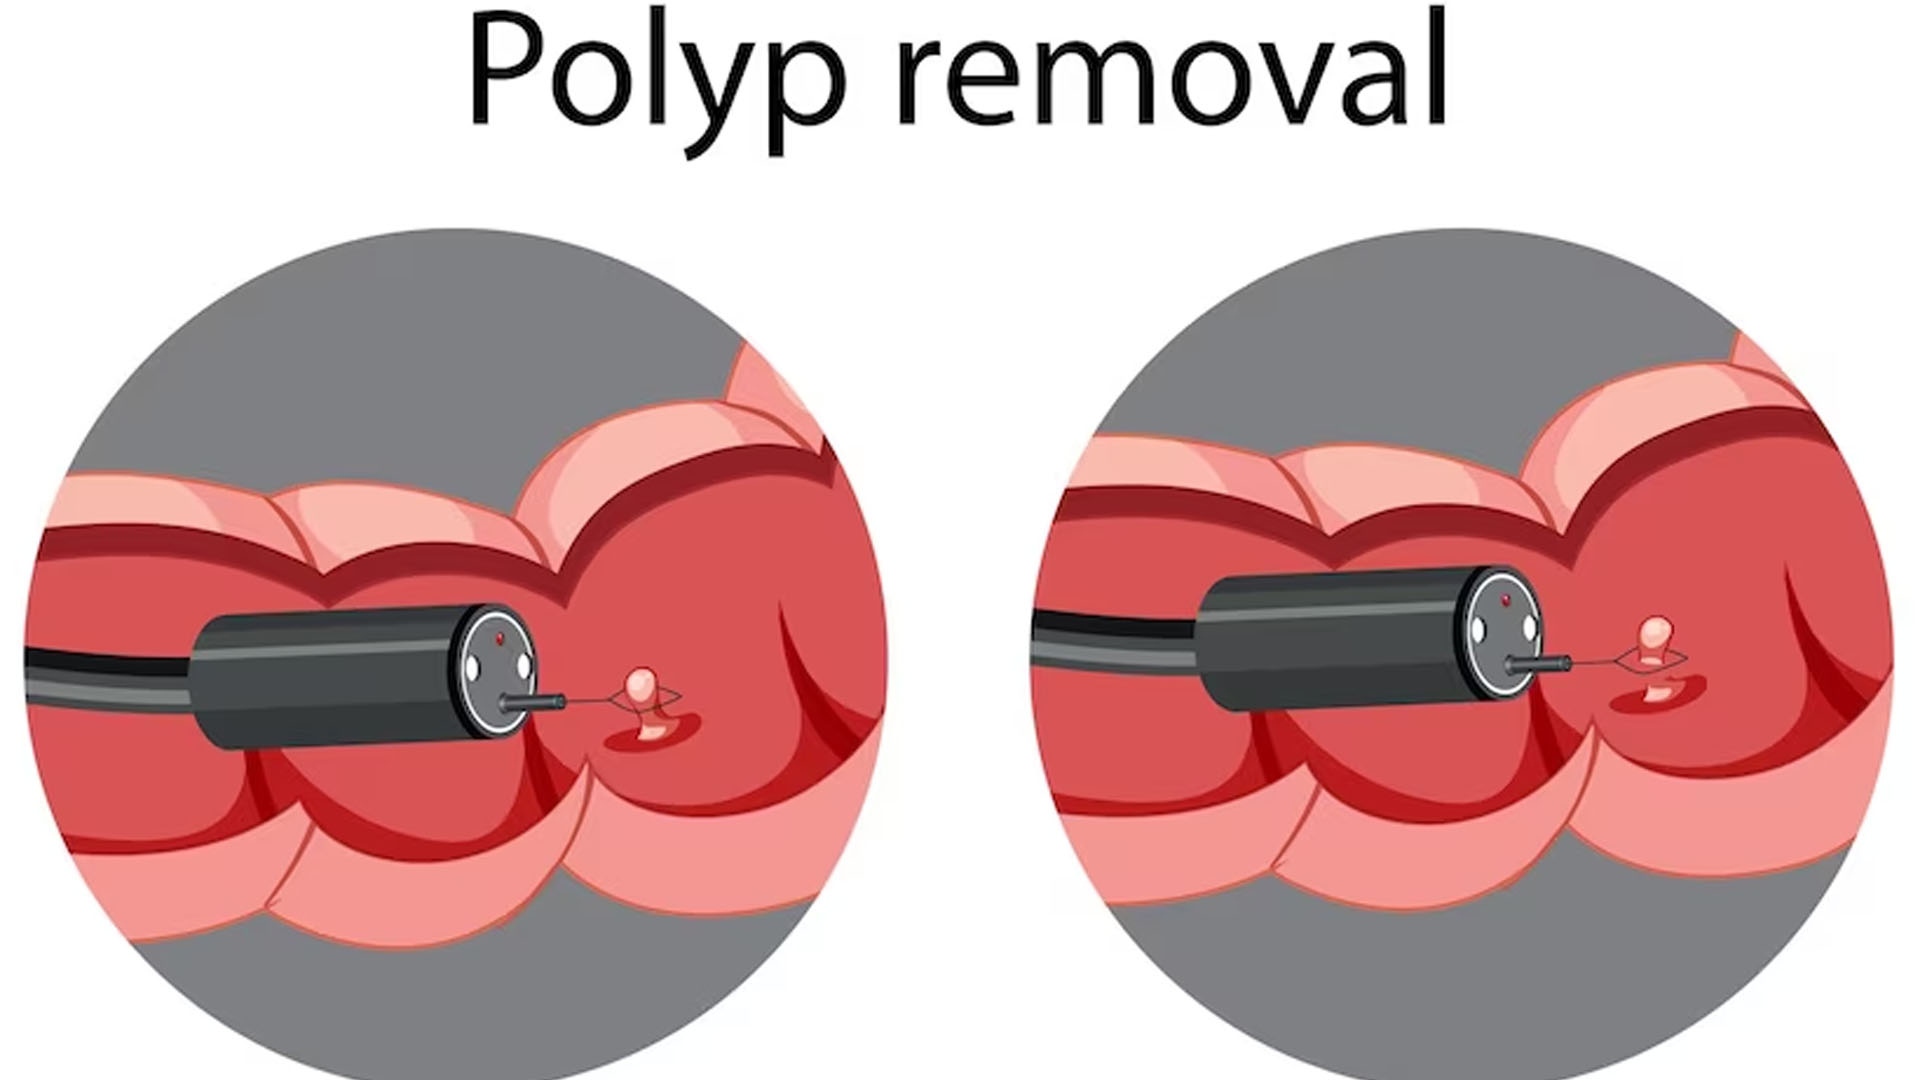 Can Benign Polyps Cause Symptoms?